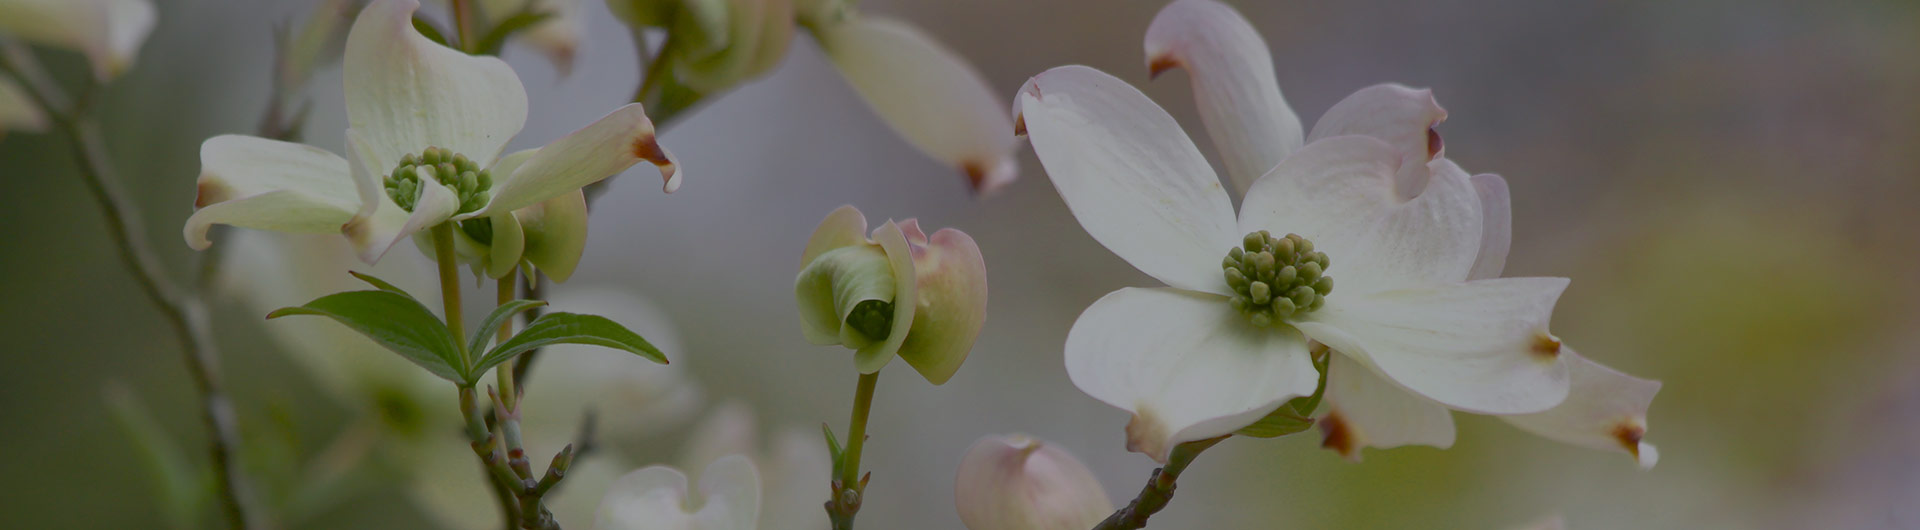 Flowering dogwood, Virginia's state flower.